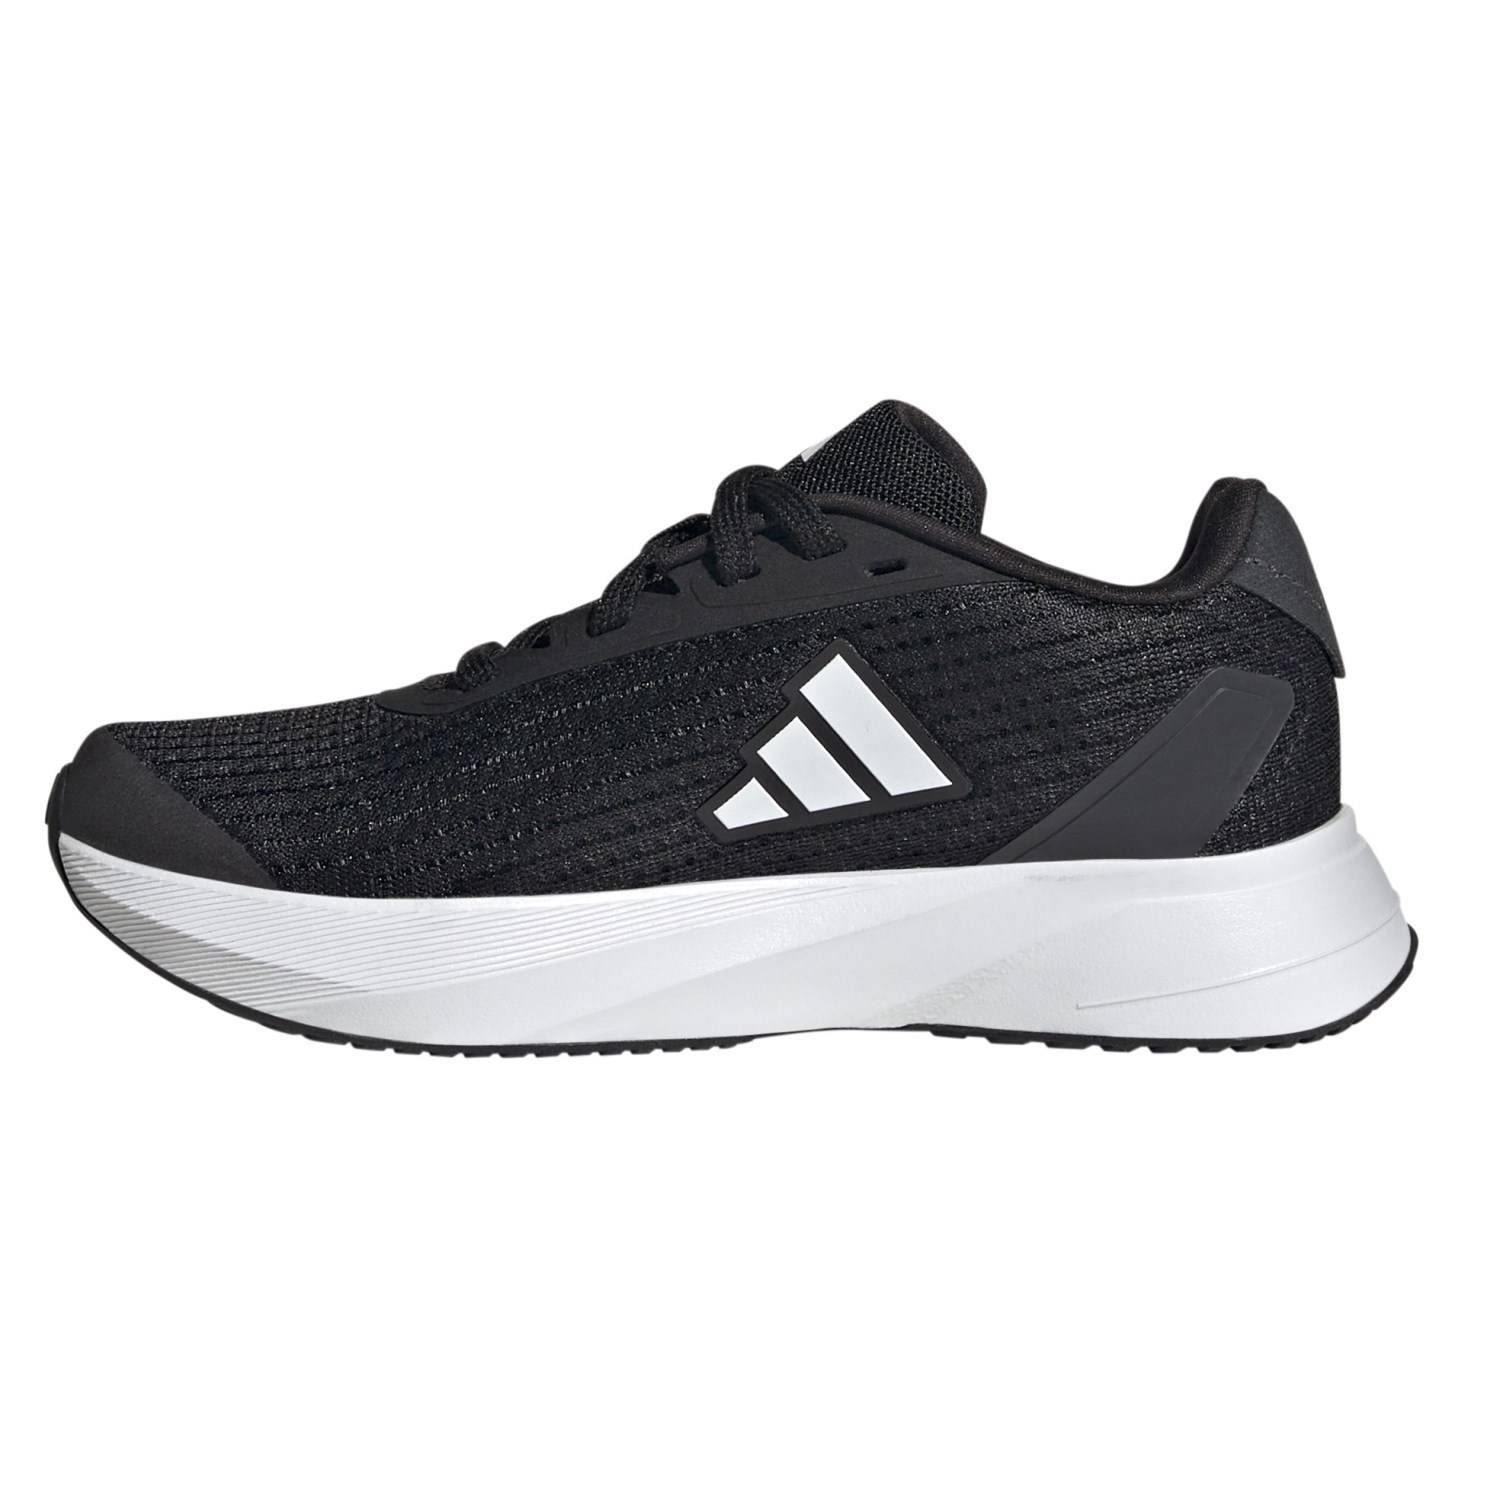 Adidas Duramo SL - Kids Running Shoes - Black/White/Carbon | Sportitude